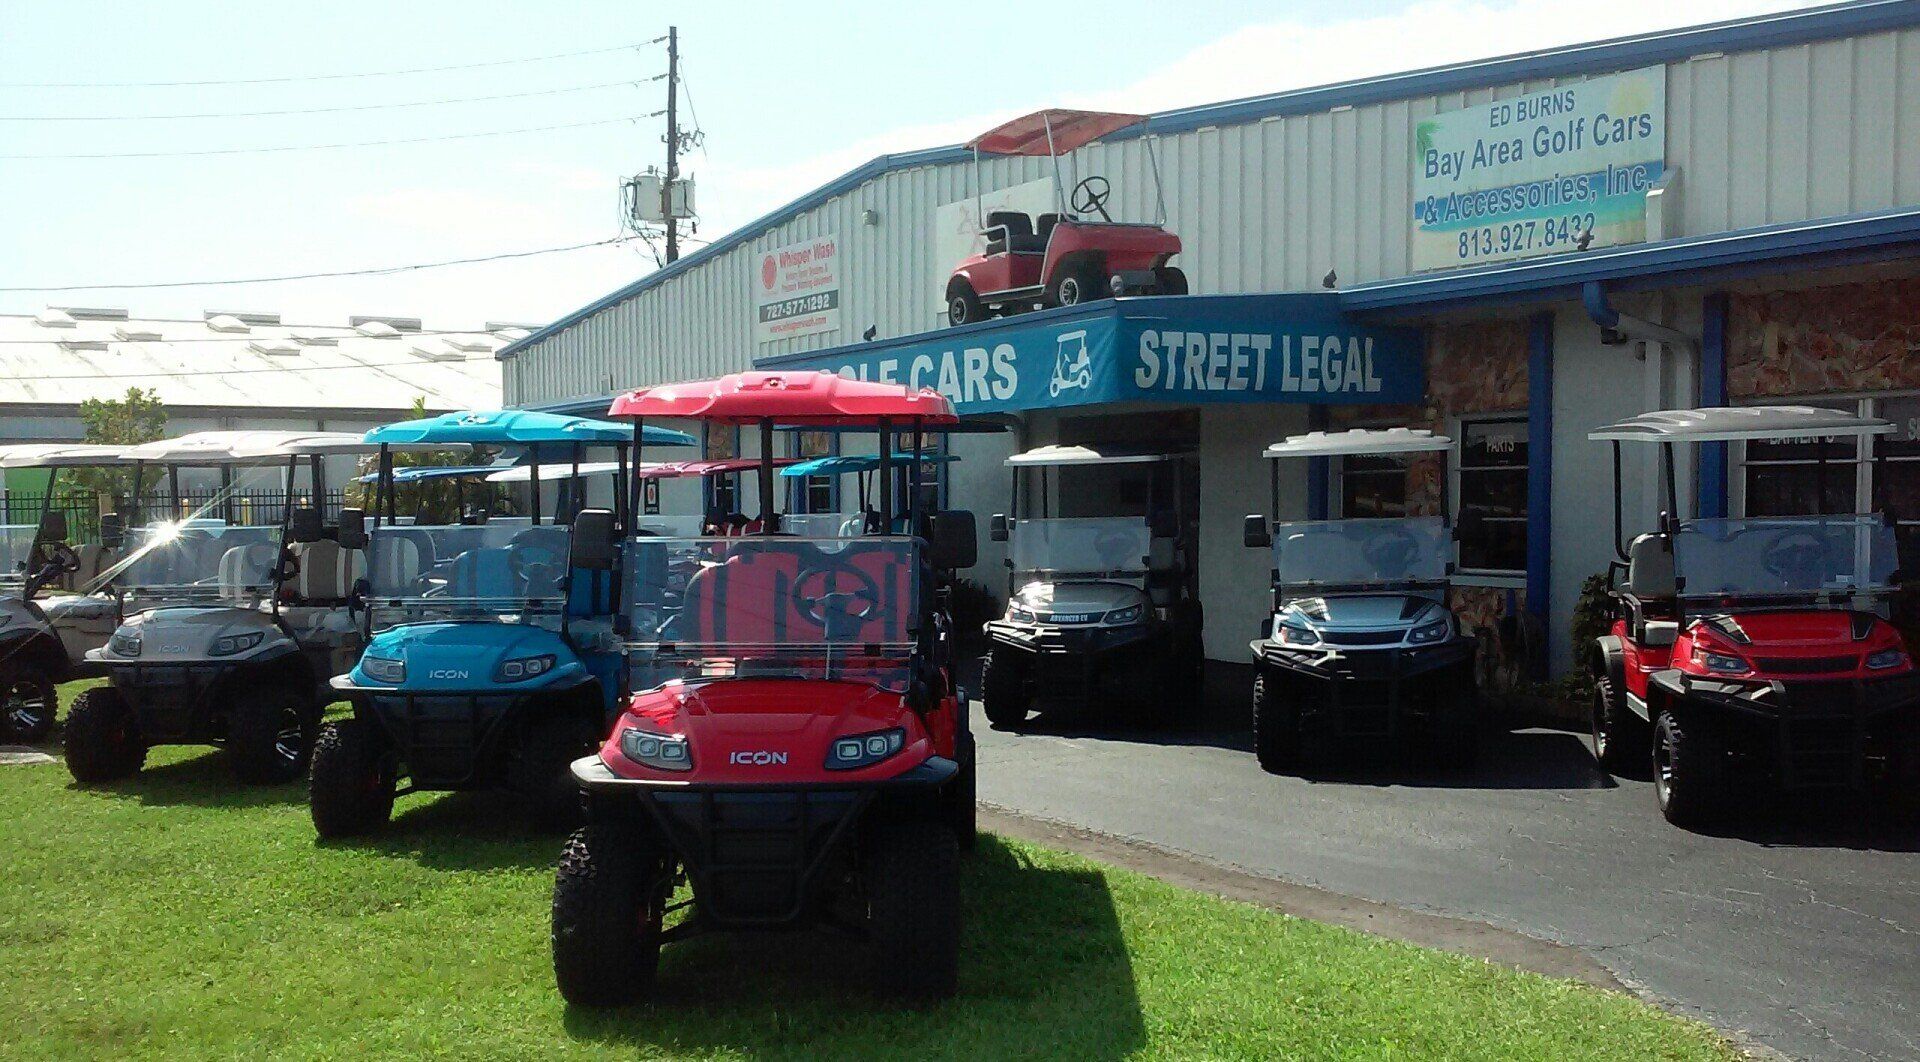 Golf Carts On Display — St. Petersburg, FL — Ed Burns Bay Area Golf Cars